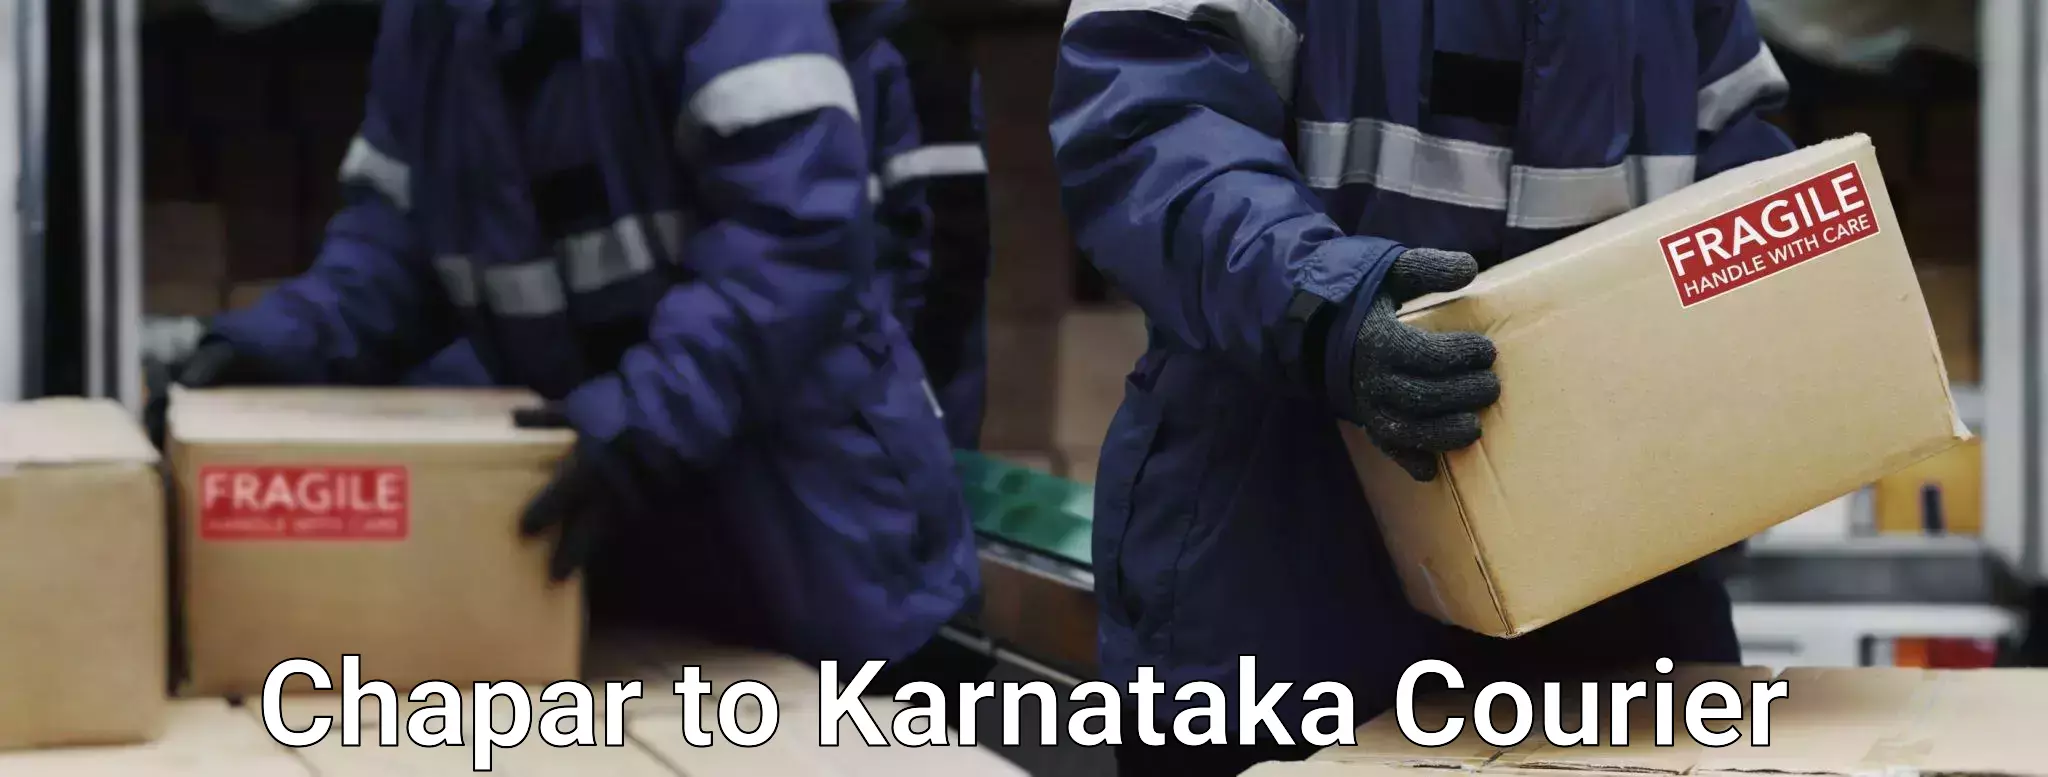 Luggage shipping guide Chapar to Kanakapura